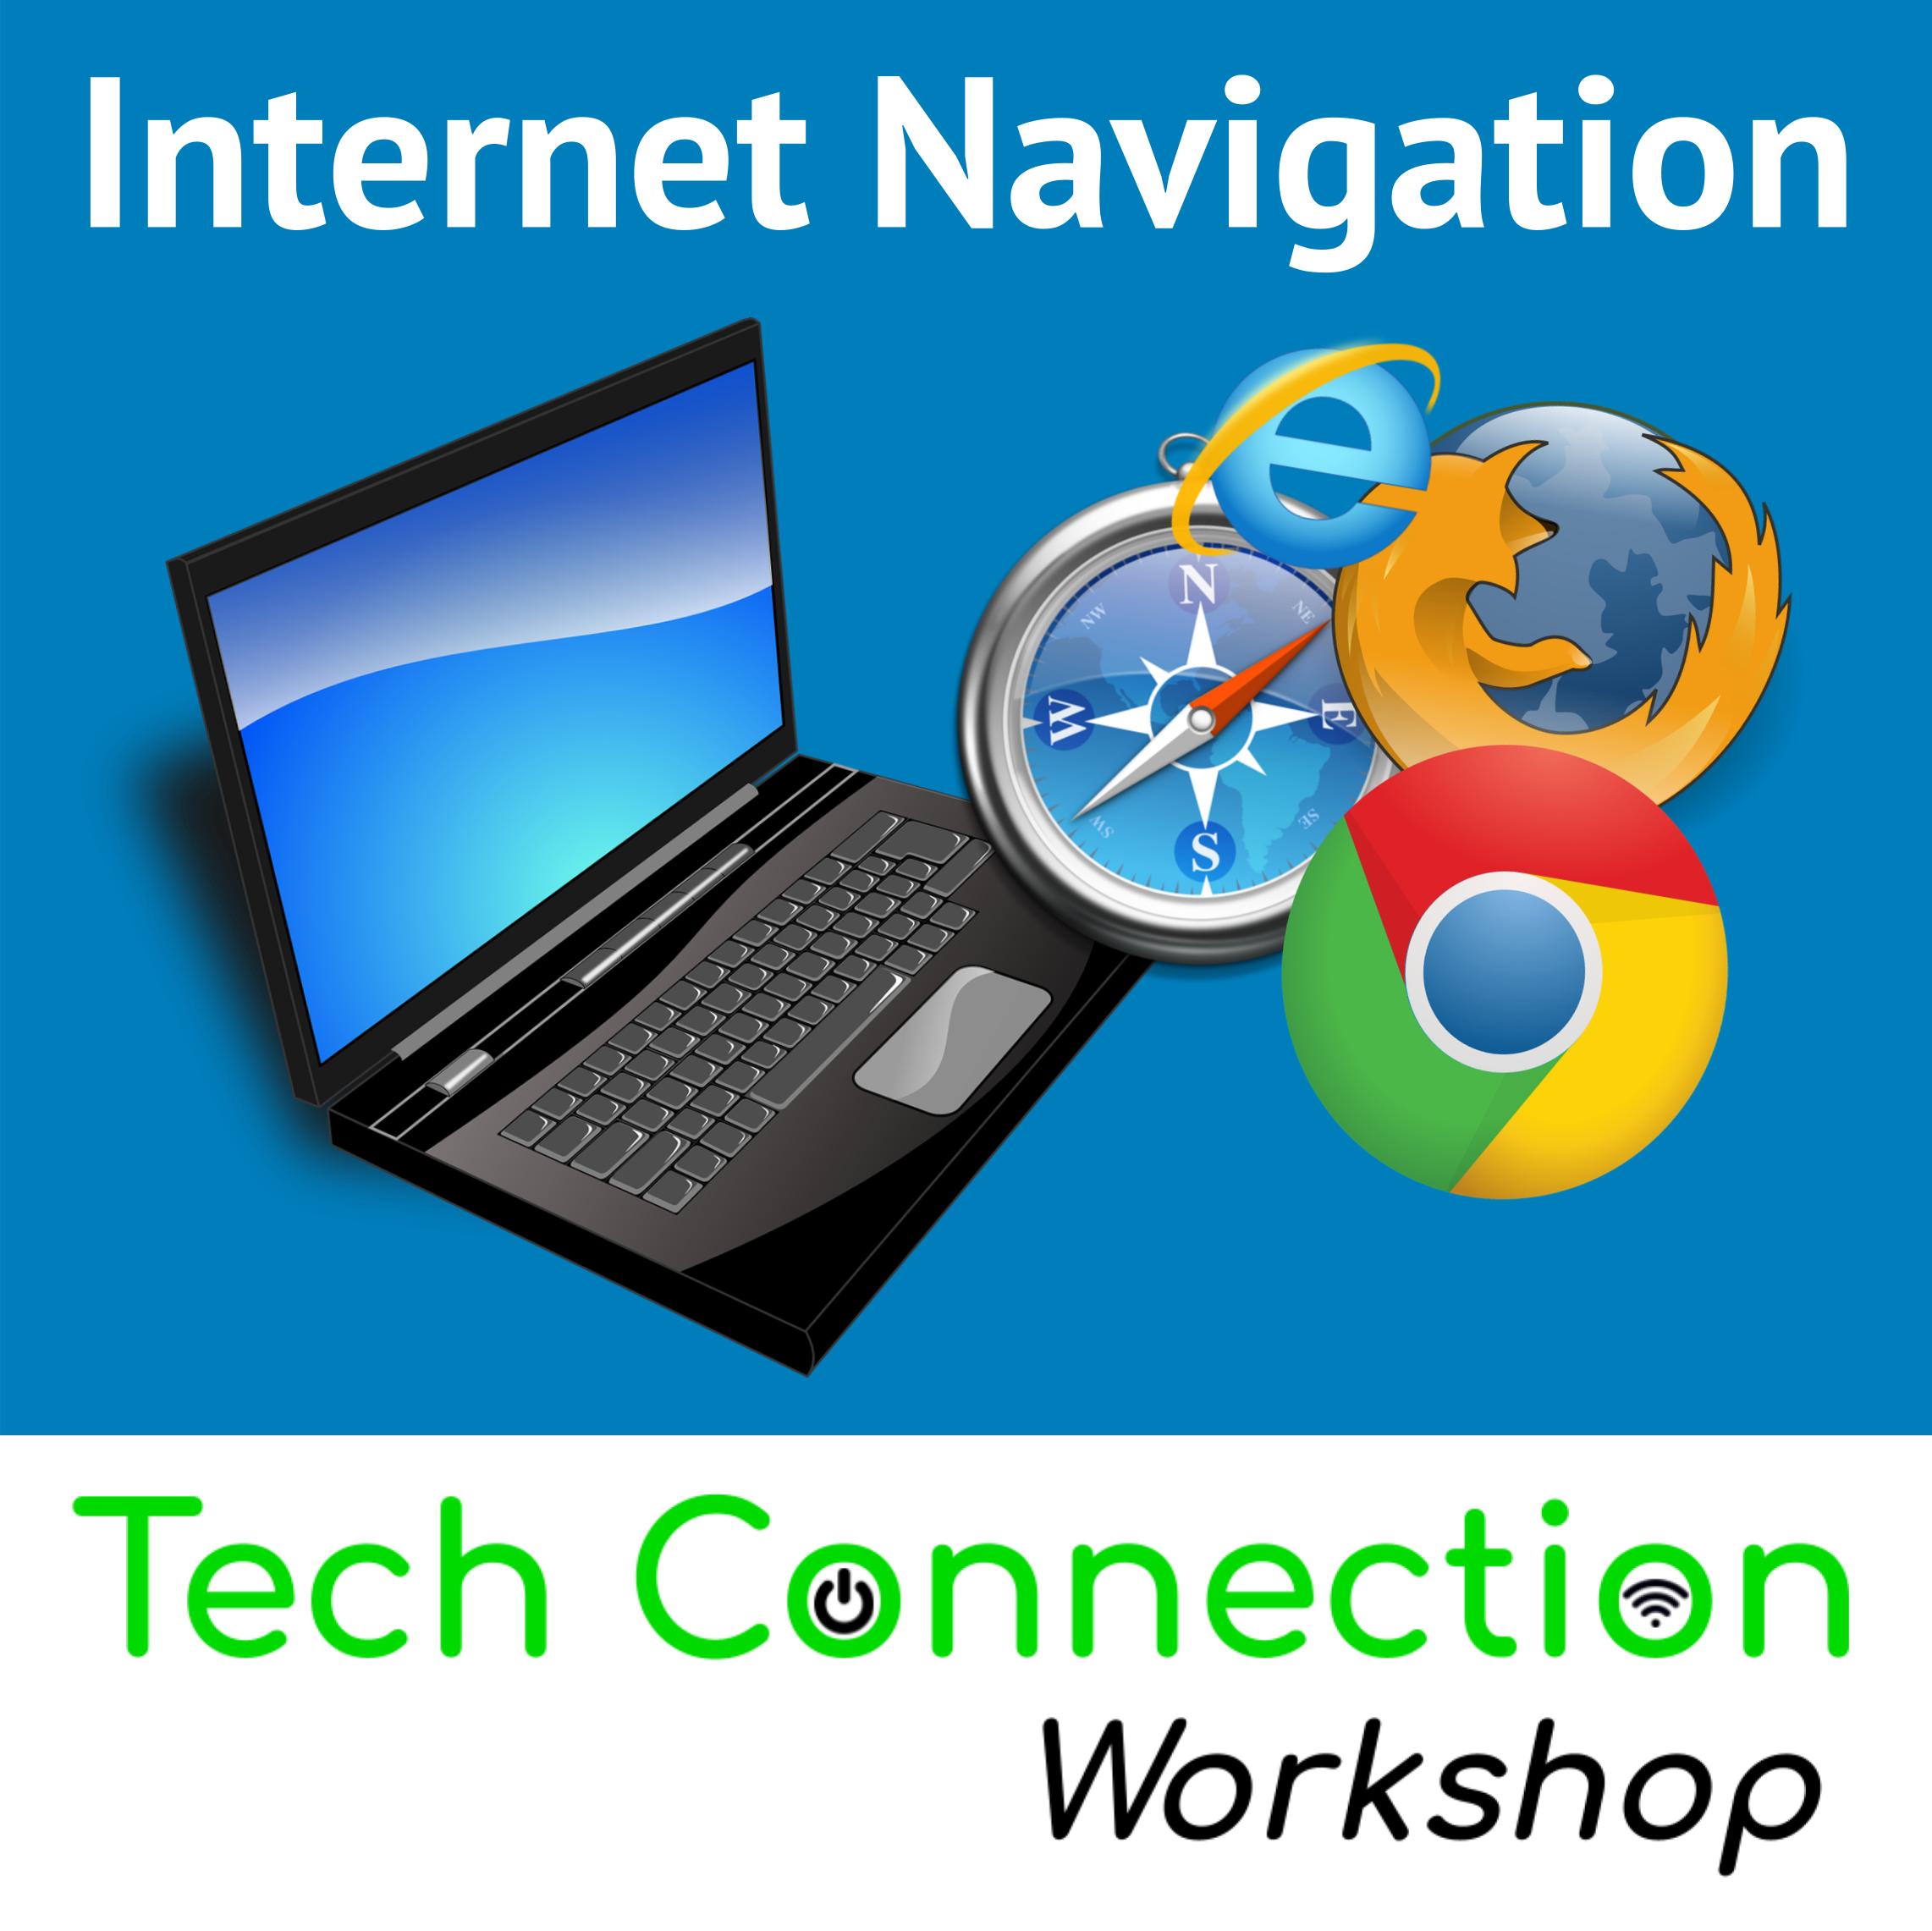 Tech Connection Workshop: Internet Navigation